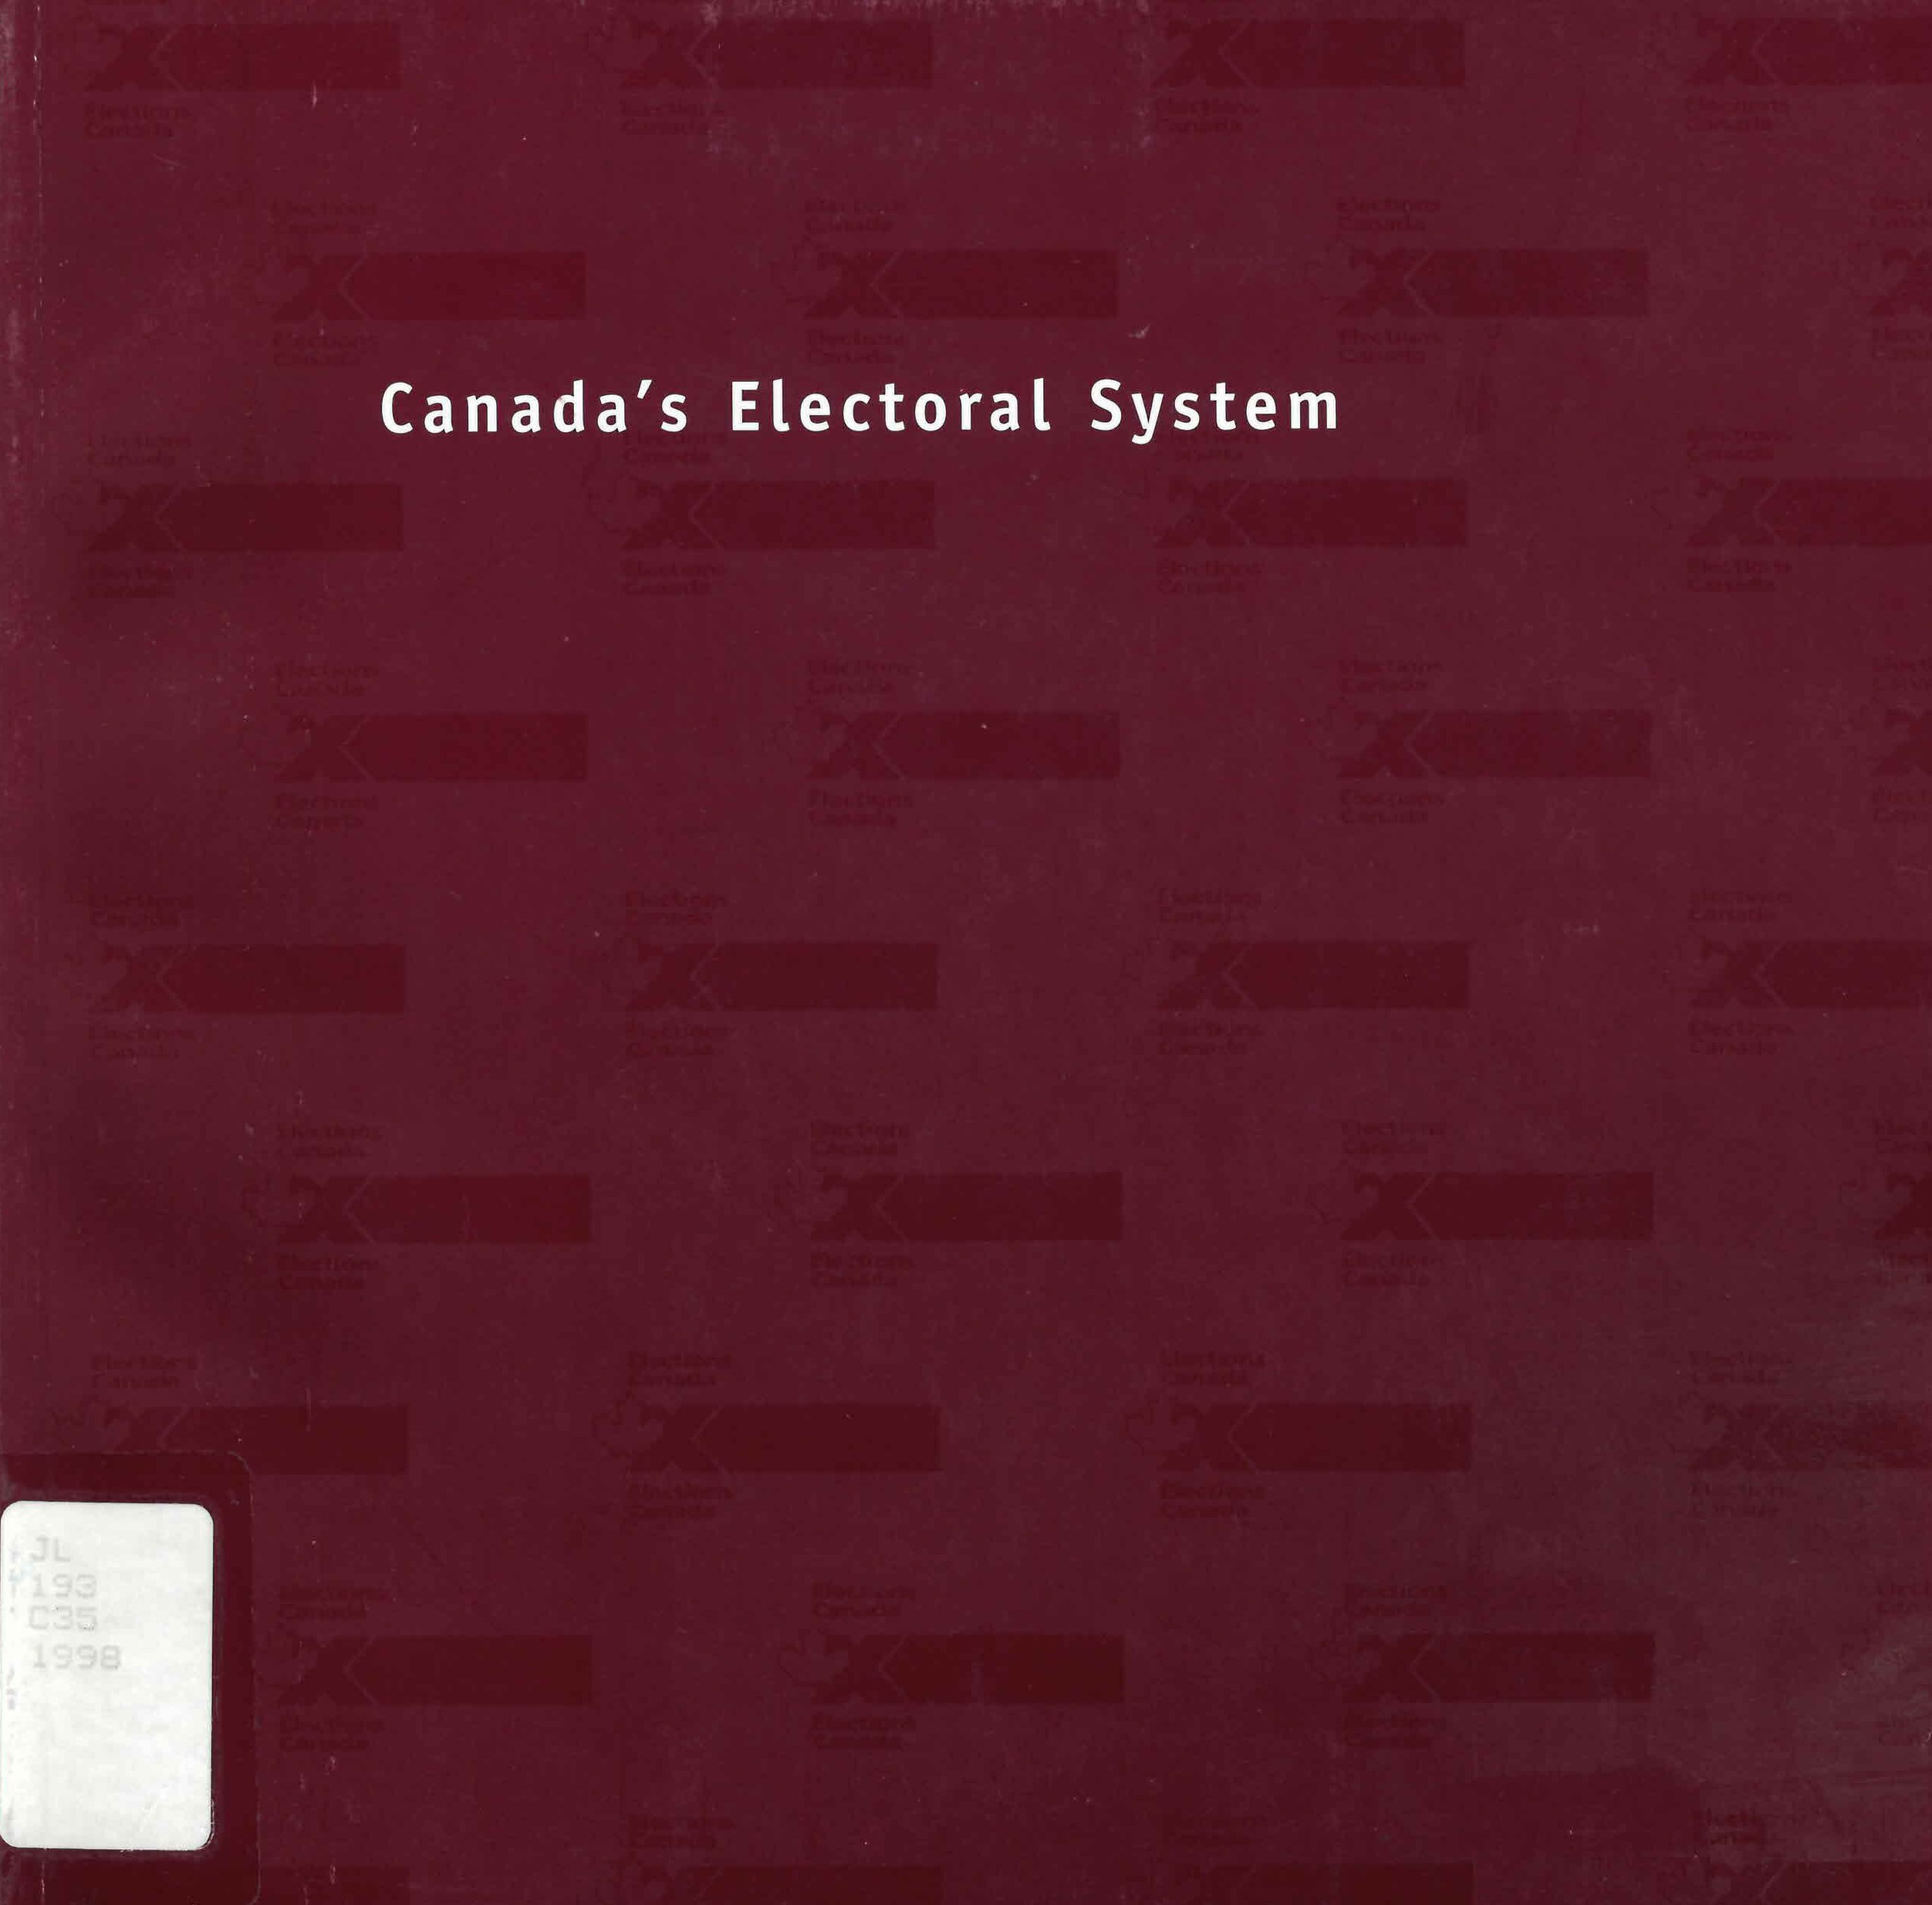 Canada's electoral system.